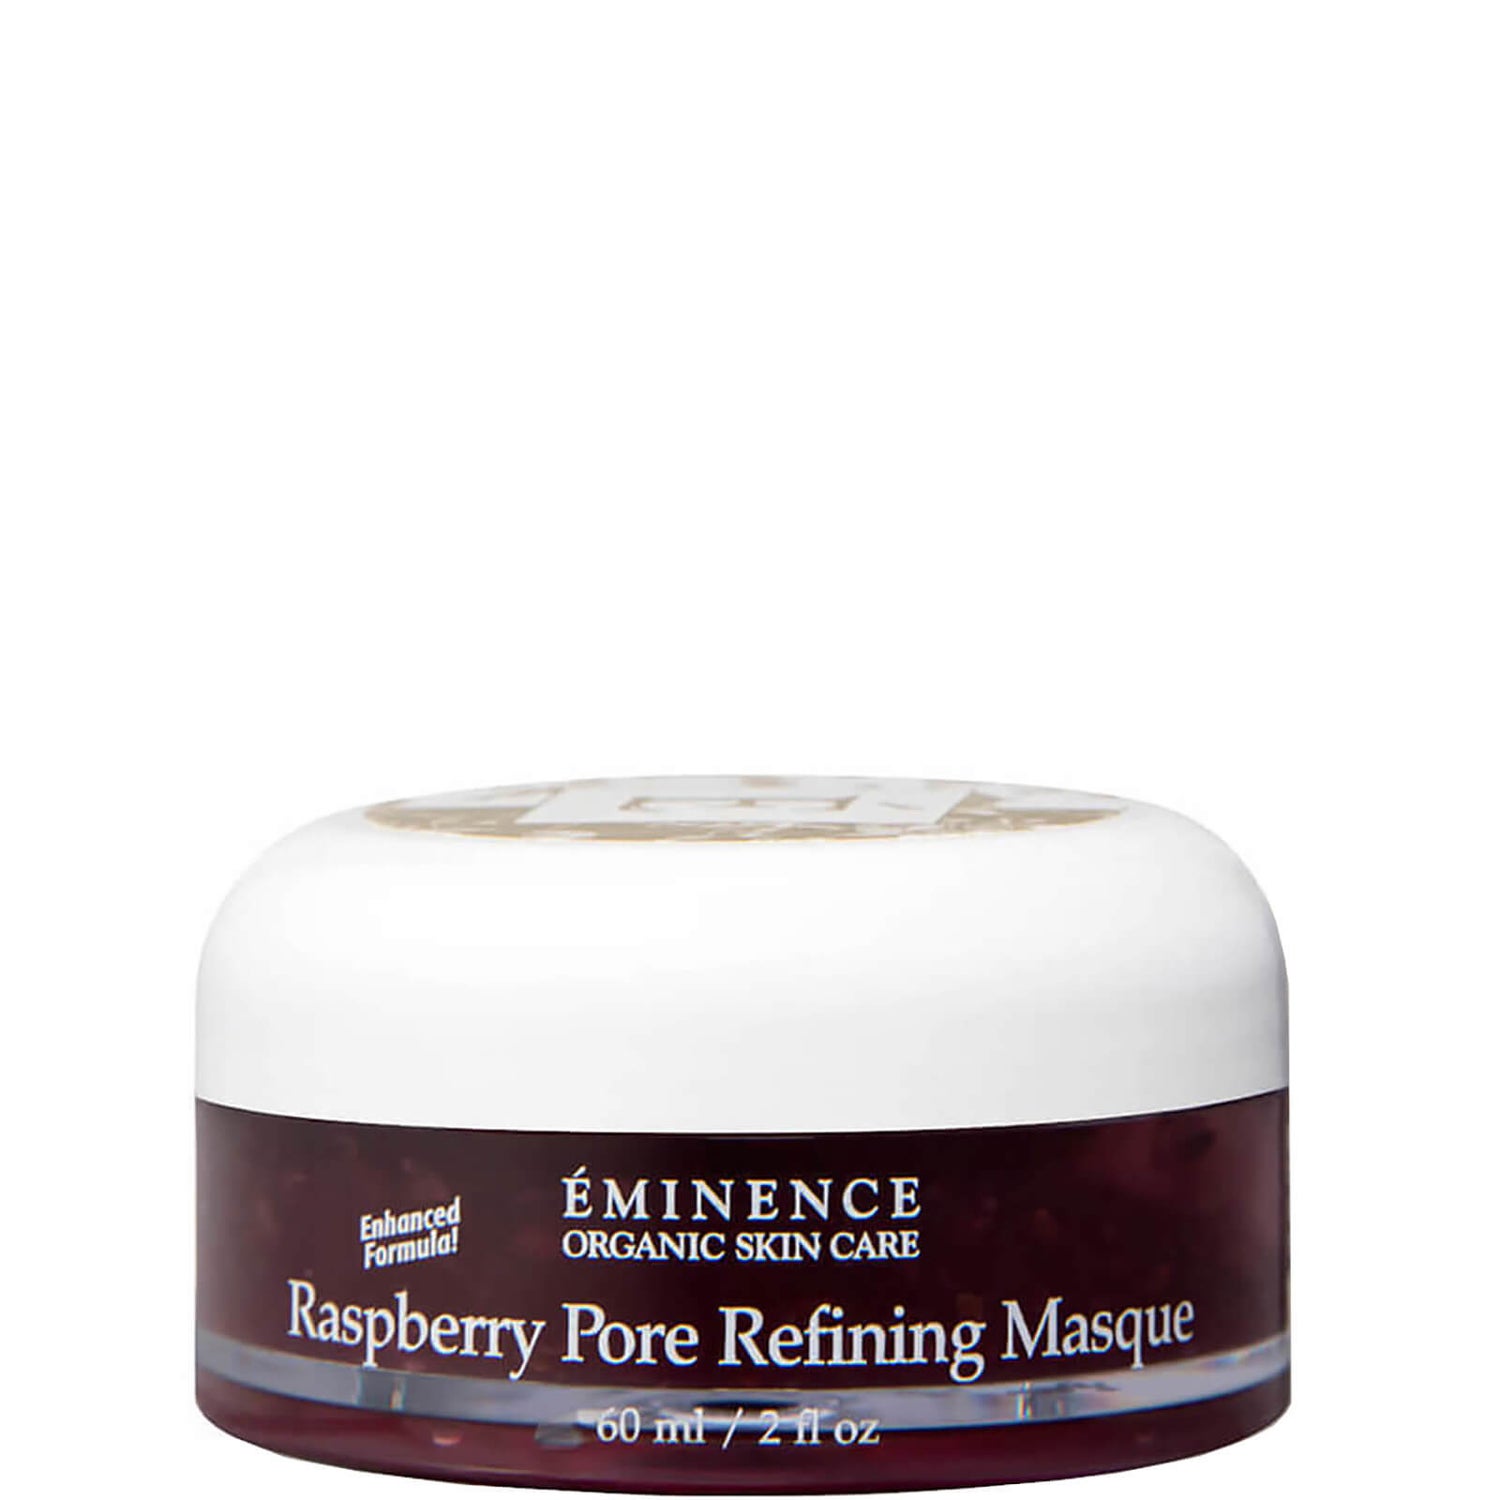 Eminence Organic Skin Care Raspberry Pore Refining Masque 2 fl. oz